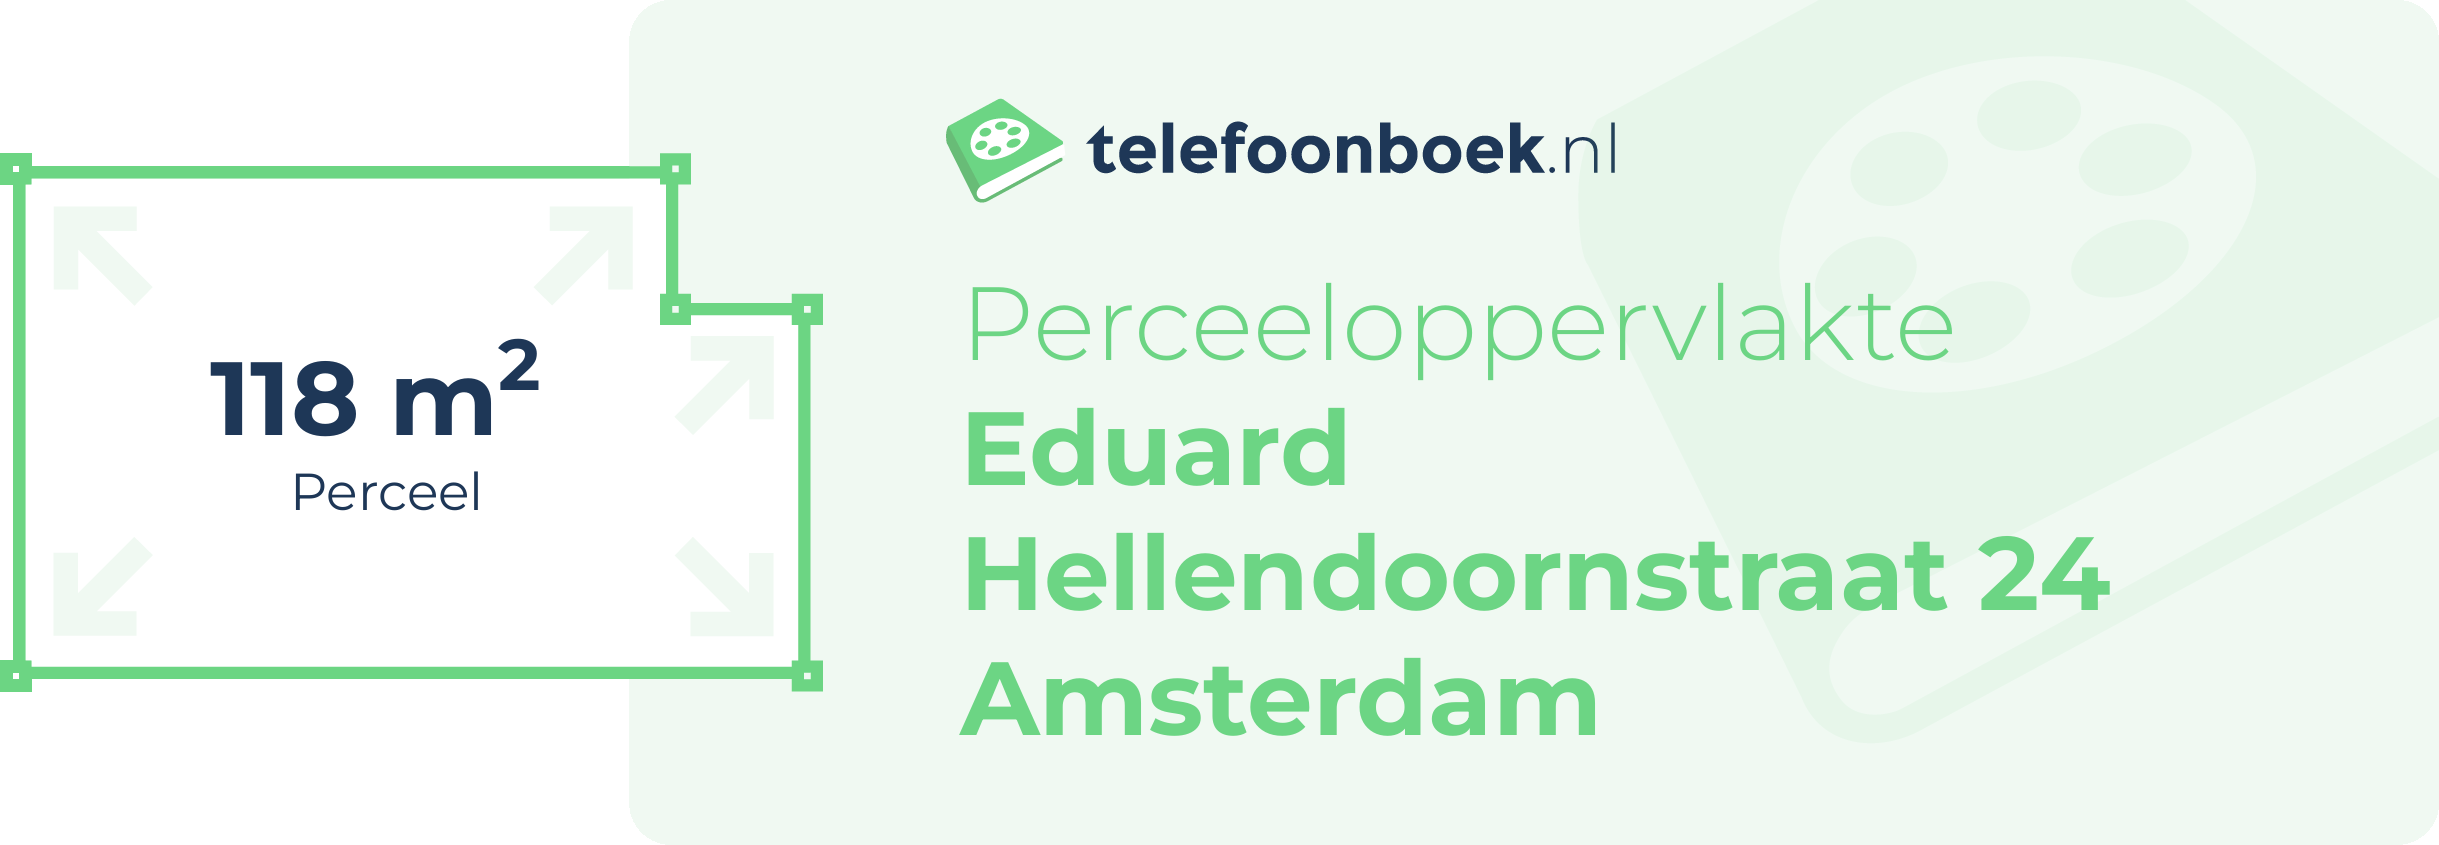 Perceeloppervlakte Eduard Hellendoornstraat 24 Amsterdam